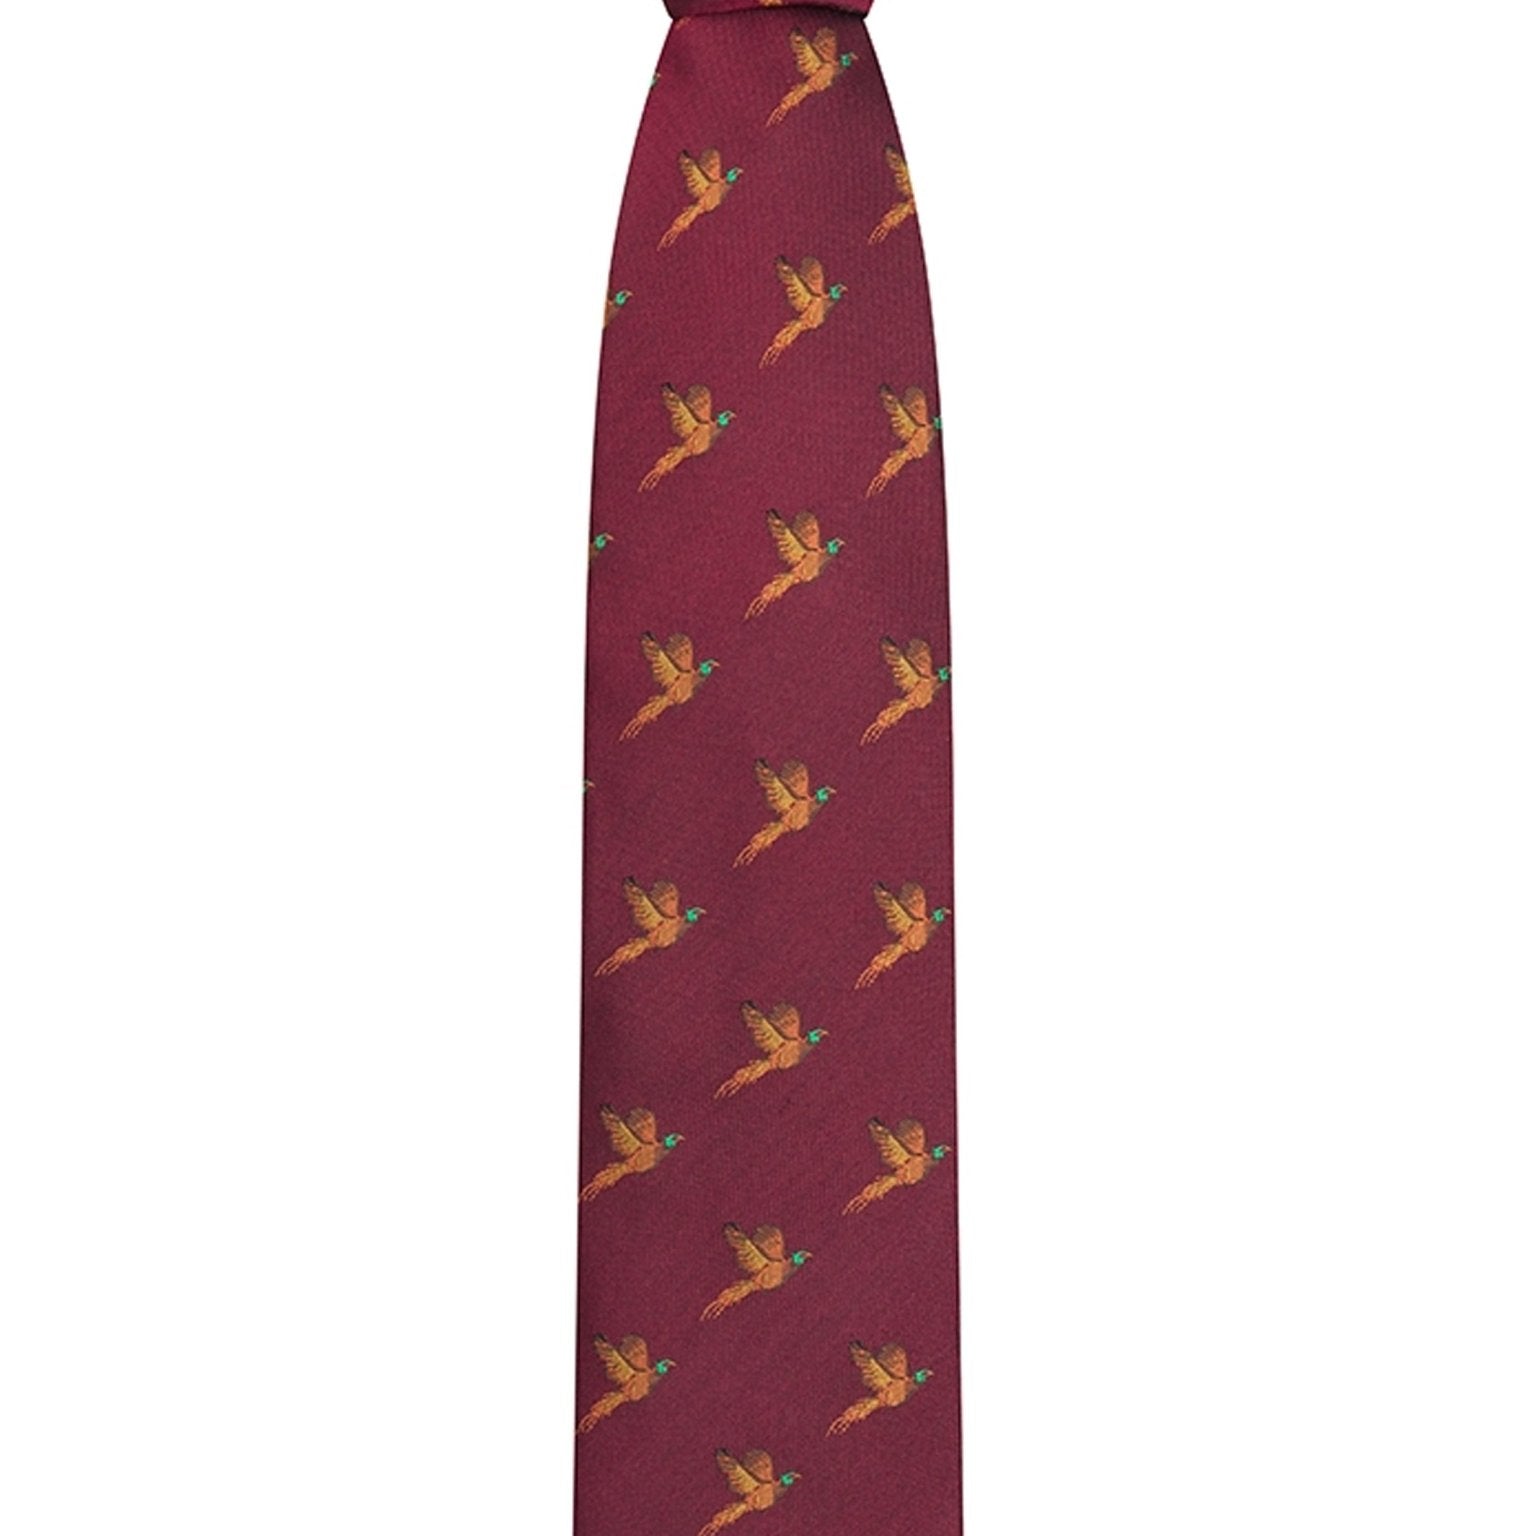 4elementsclothingHoggs of FifeHoggs of Fife - Premium 100% Silk Woven Neck Tie - Pheasant print (Boxed)AccessoriesSTIE/WI/1